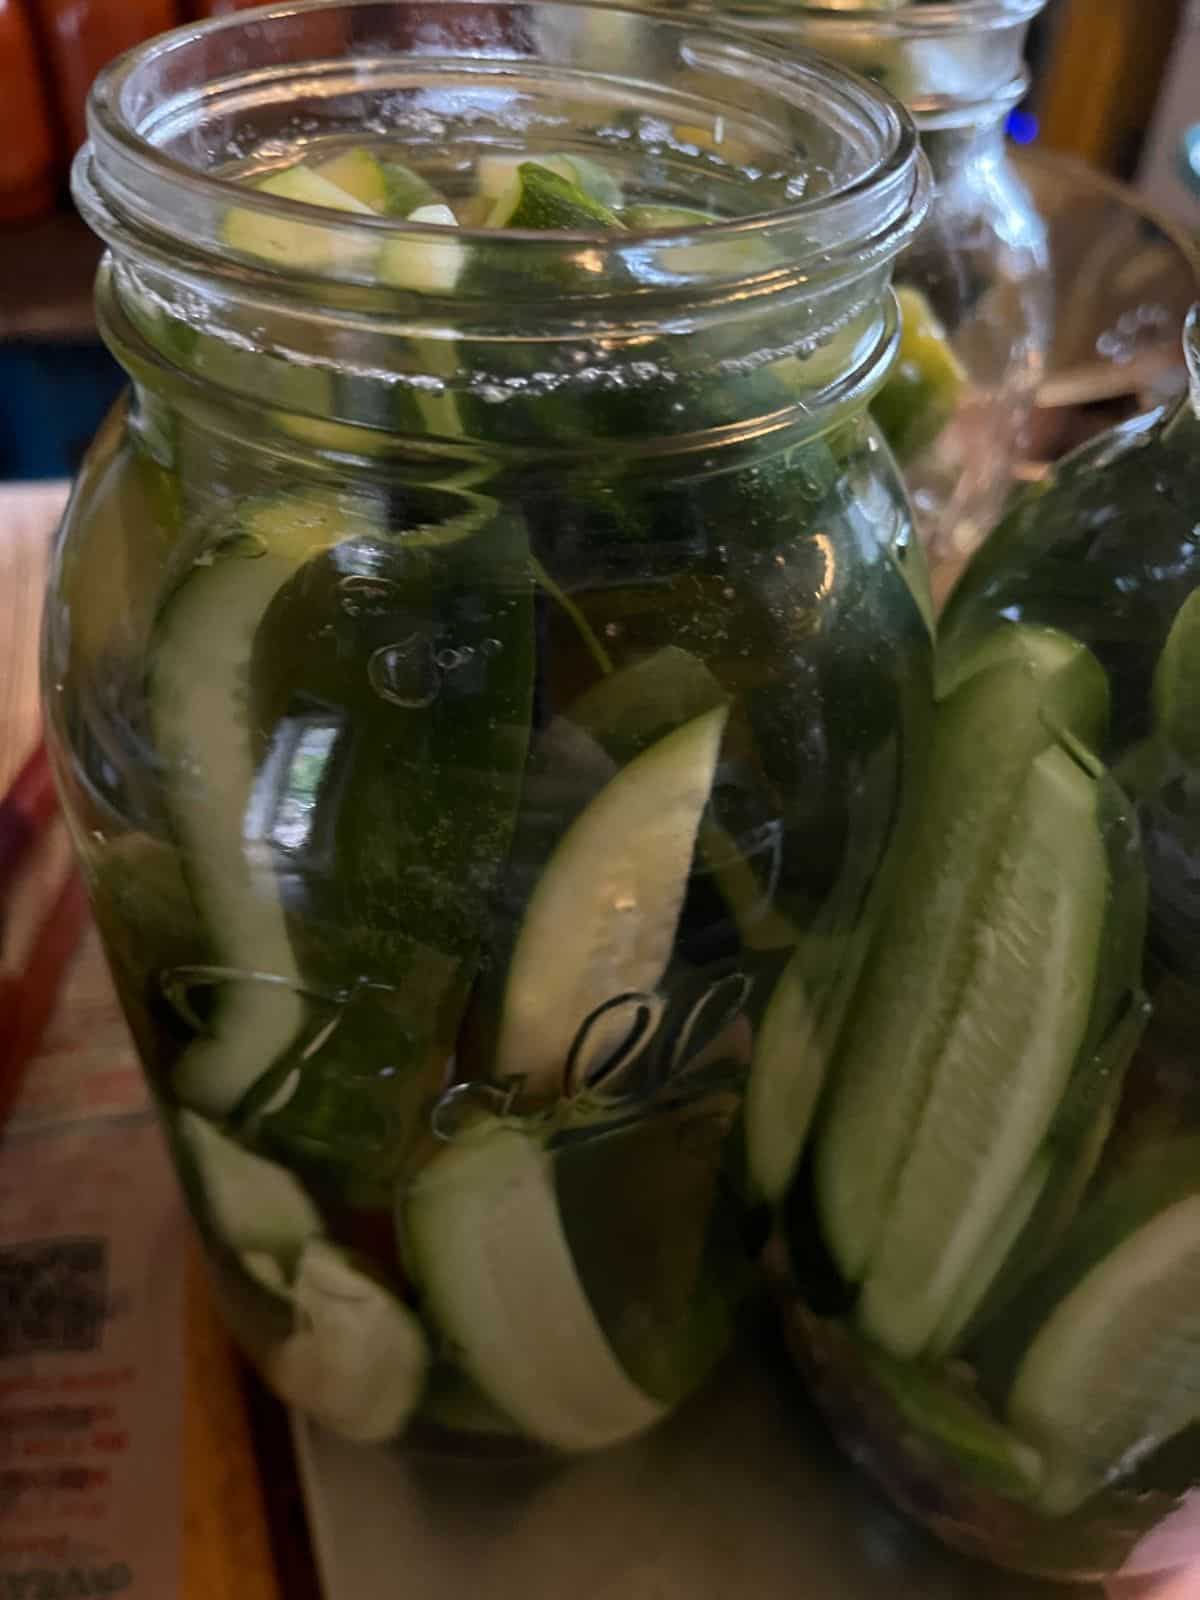 A jar of prepared refrigerator dill pickles close up